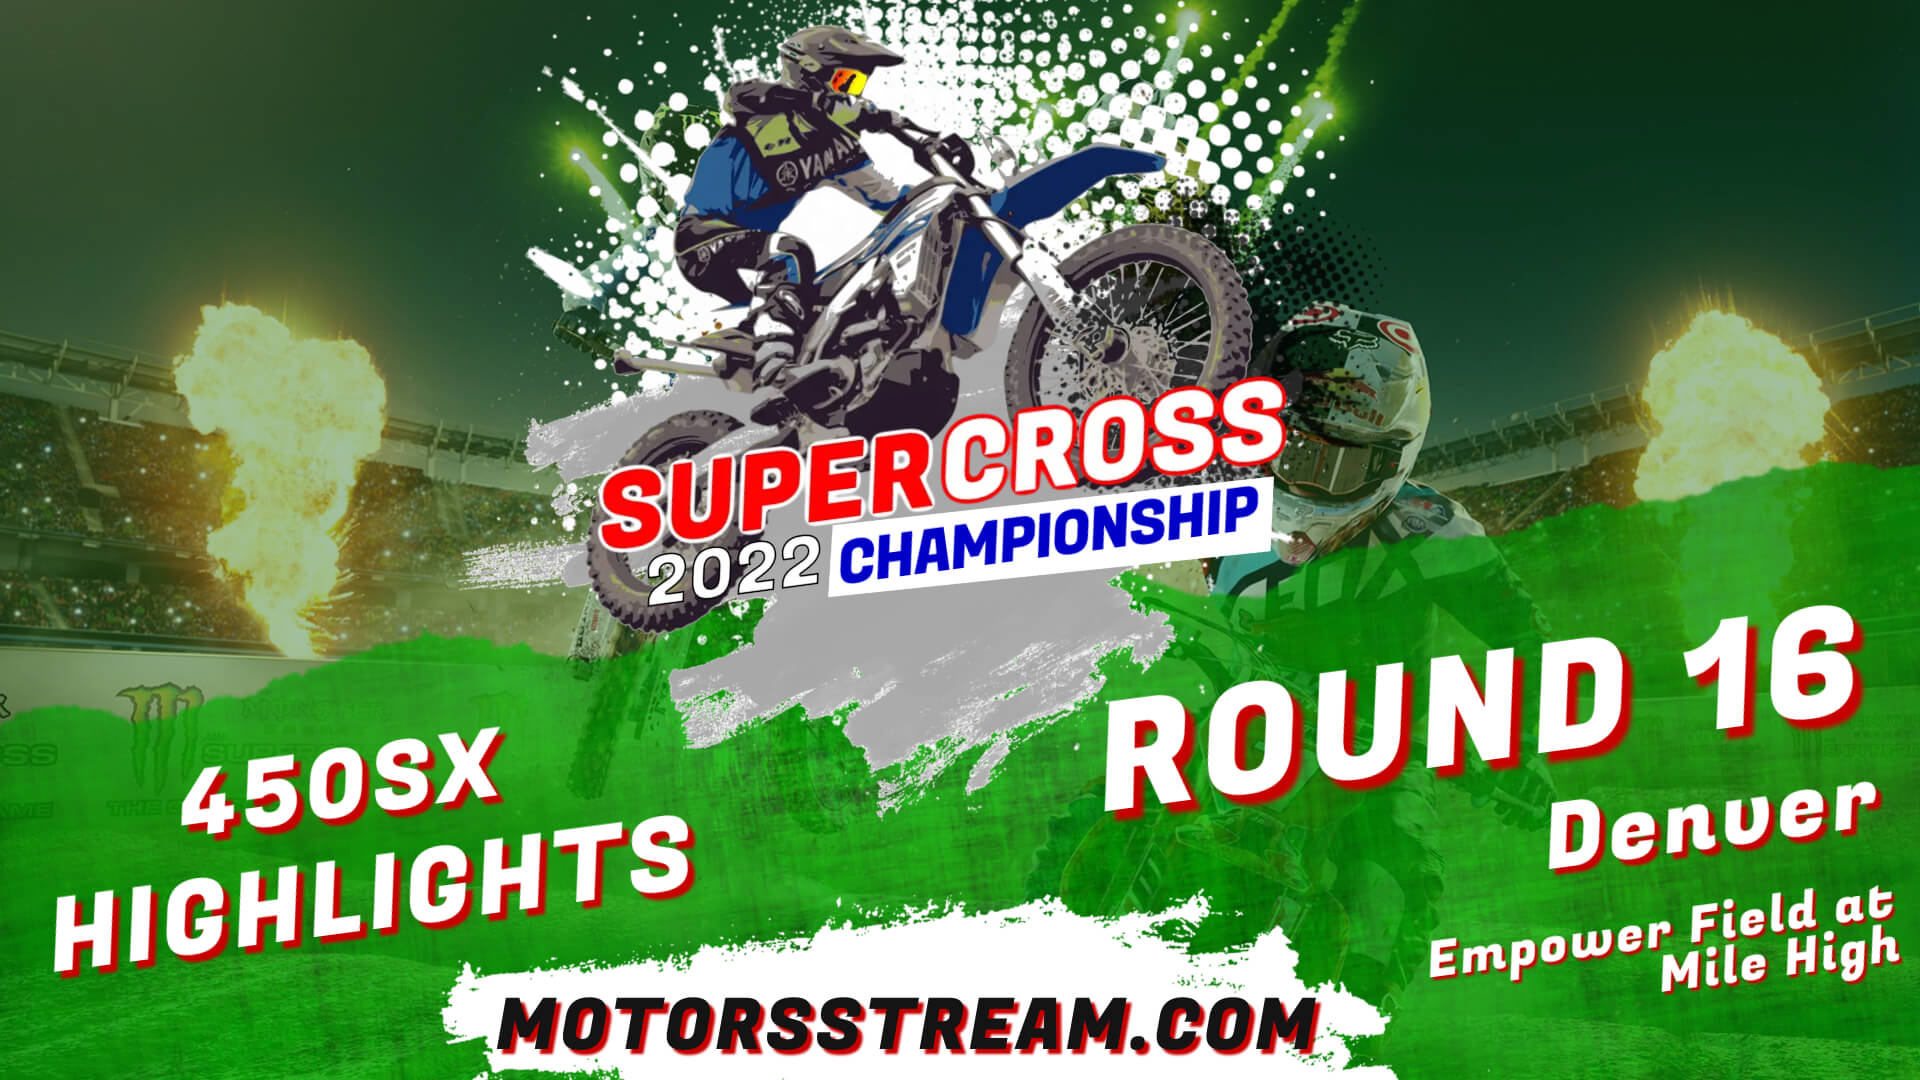 Supercross Round 16 Denver 450SX Highlights 2022